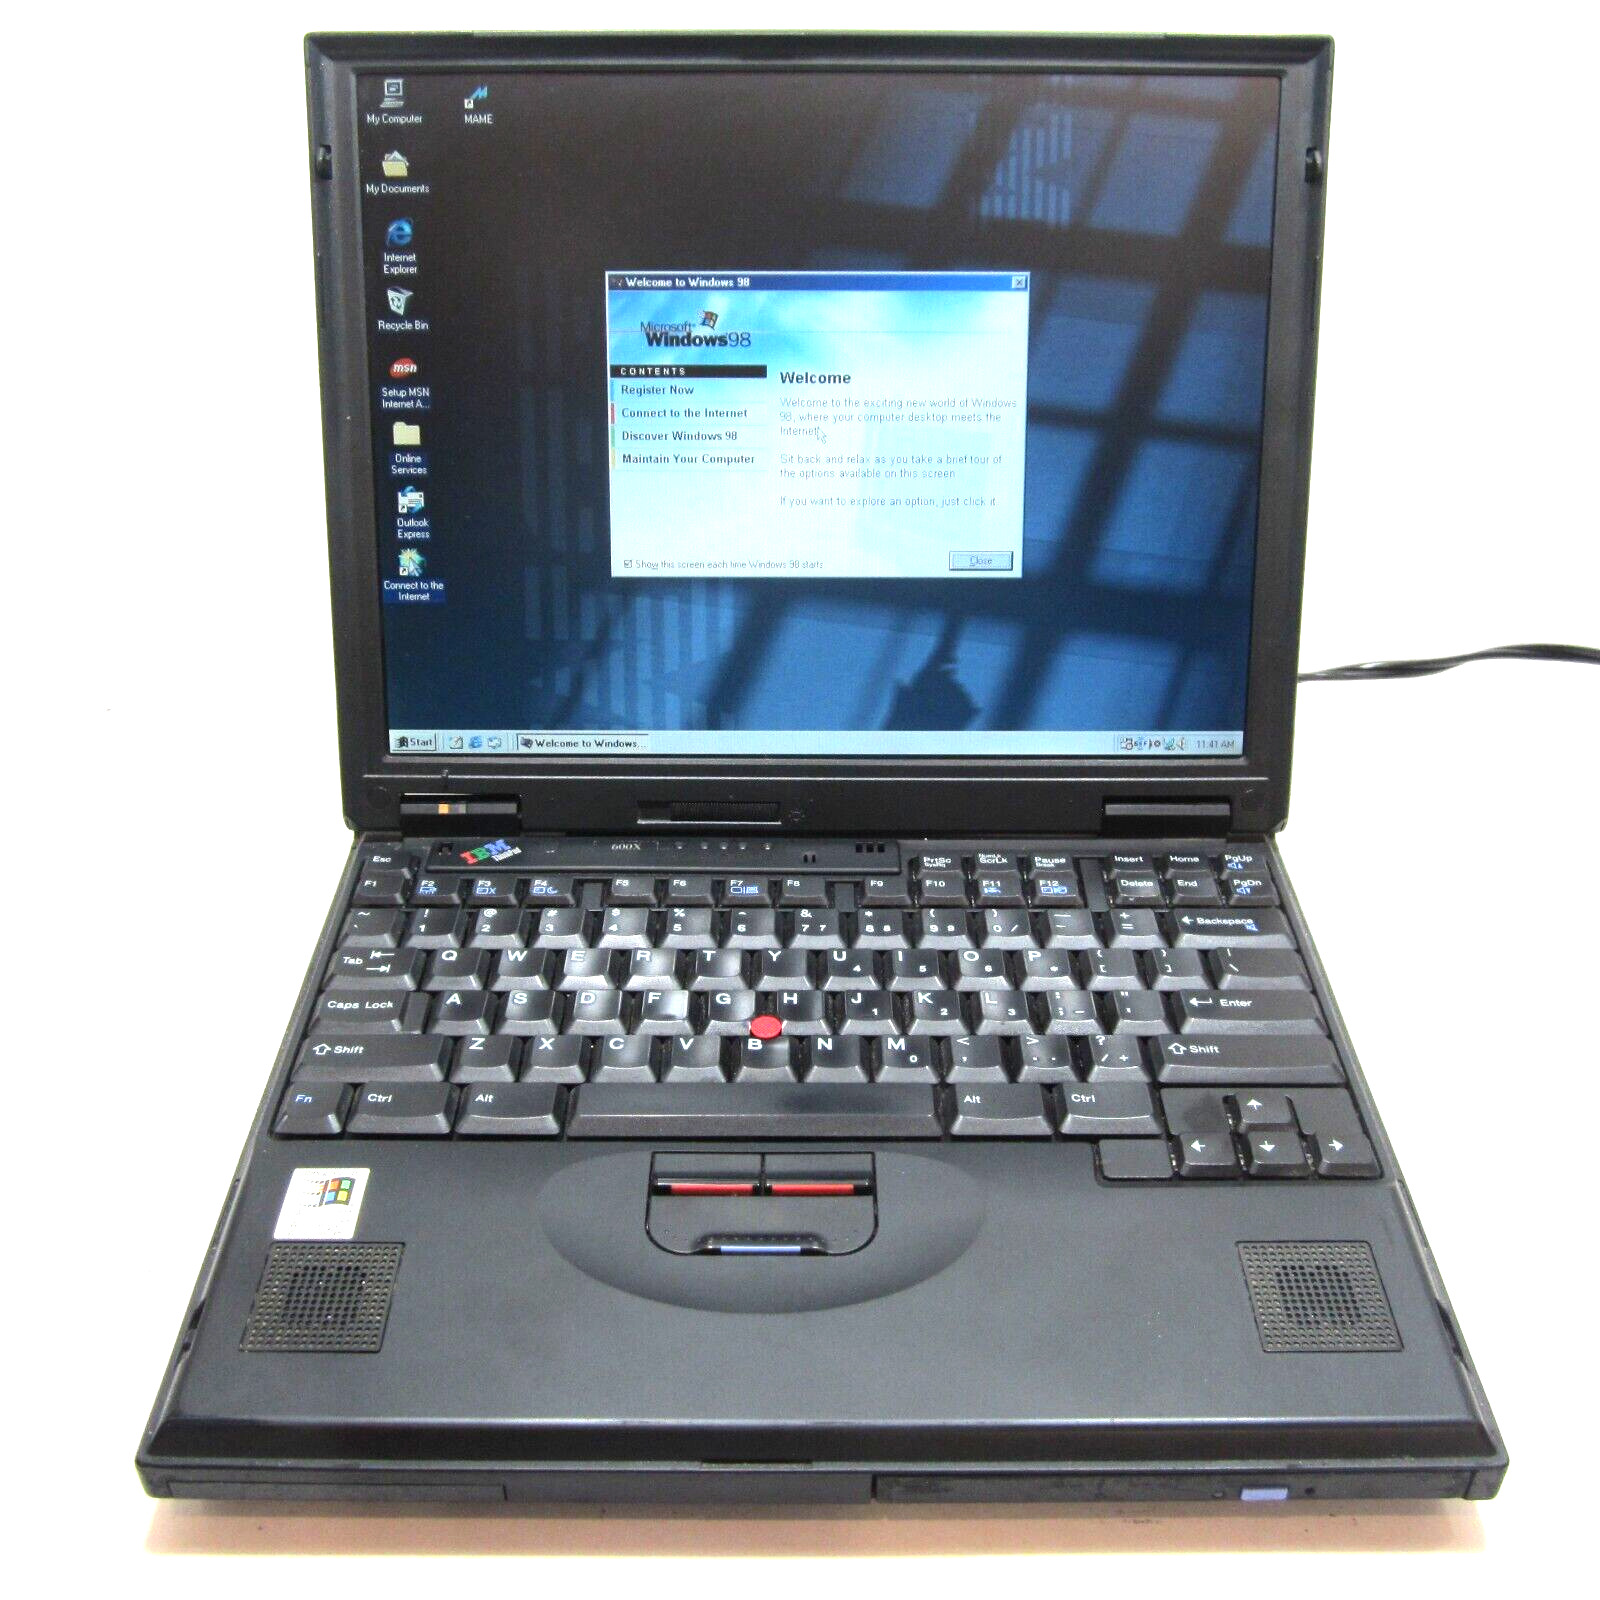 Vintage IBM Thinkpad 600x Windows 98 SE Laptop PIII 450MHz 128MB RAM 40GB HDD